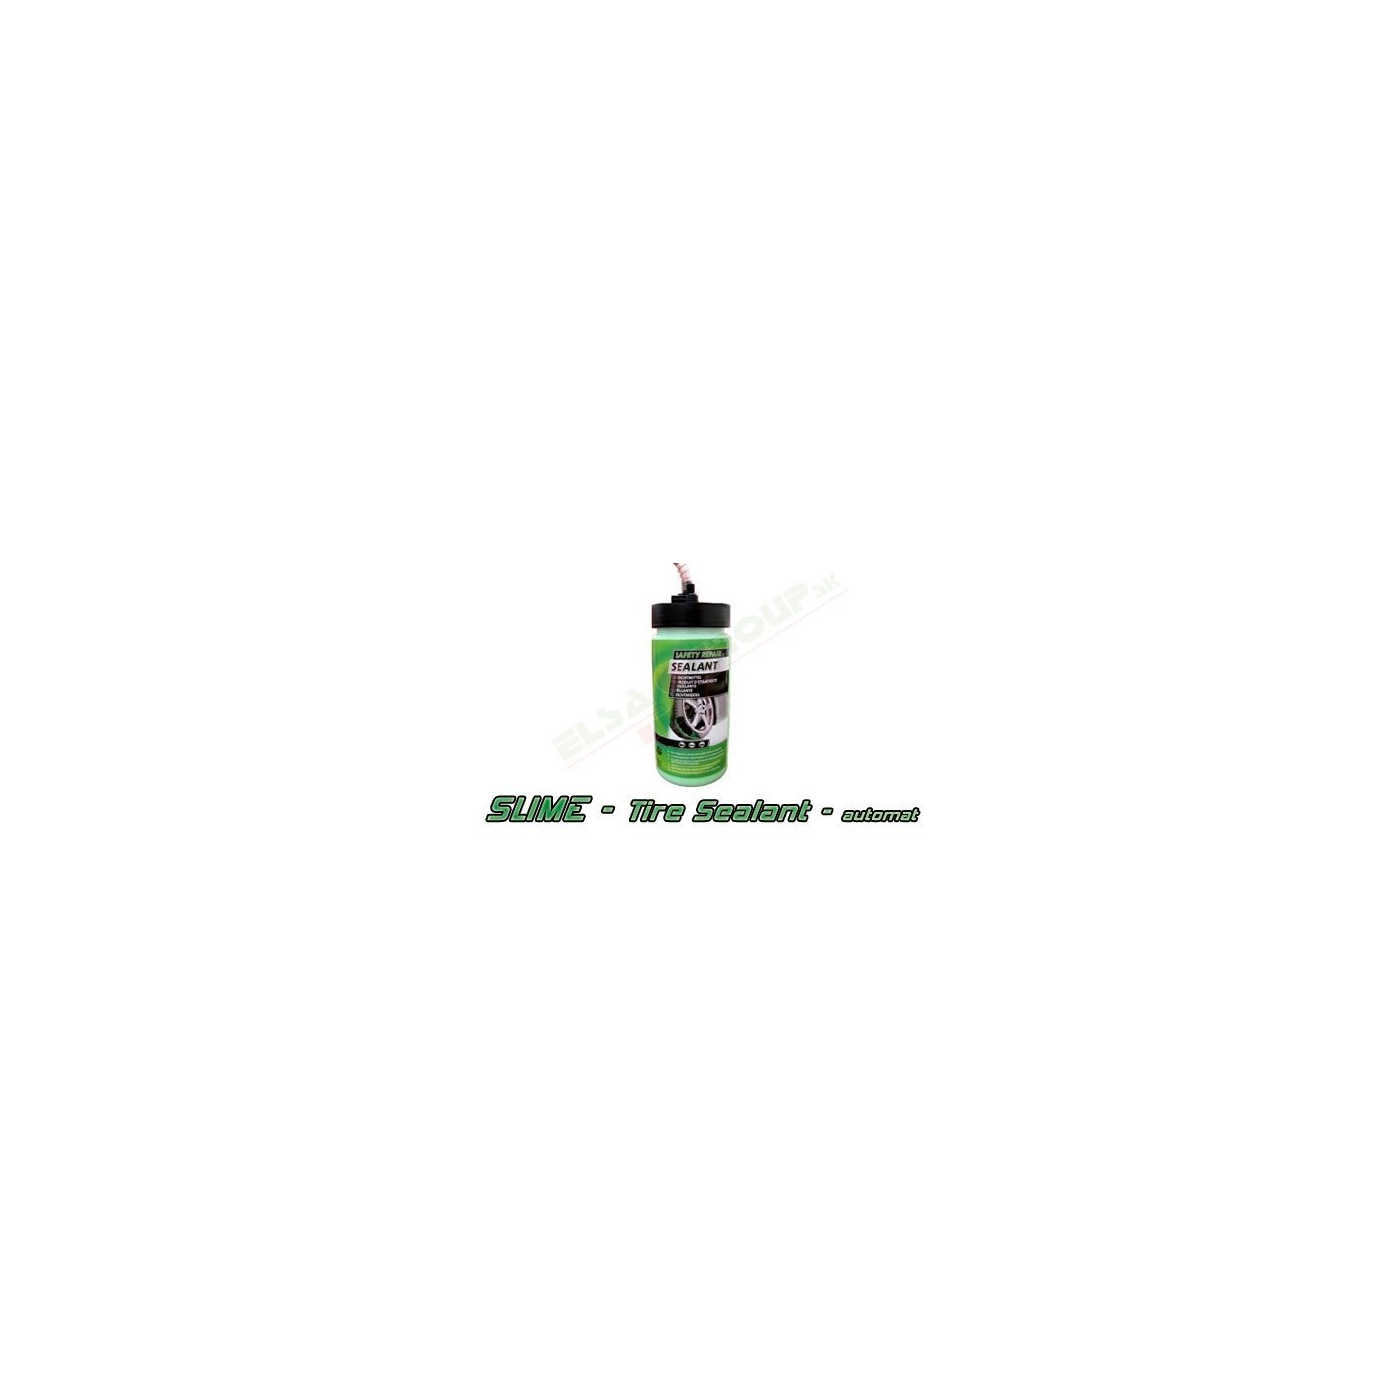 folyékony póteréka - Töltelék Slime Safety Spair